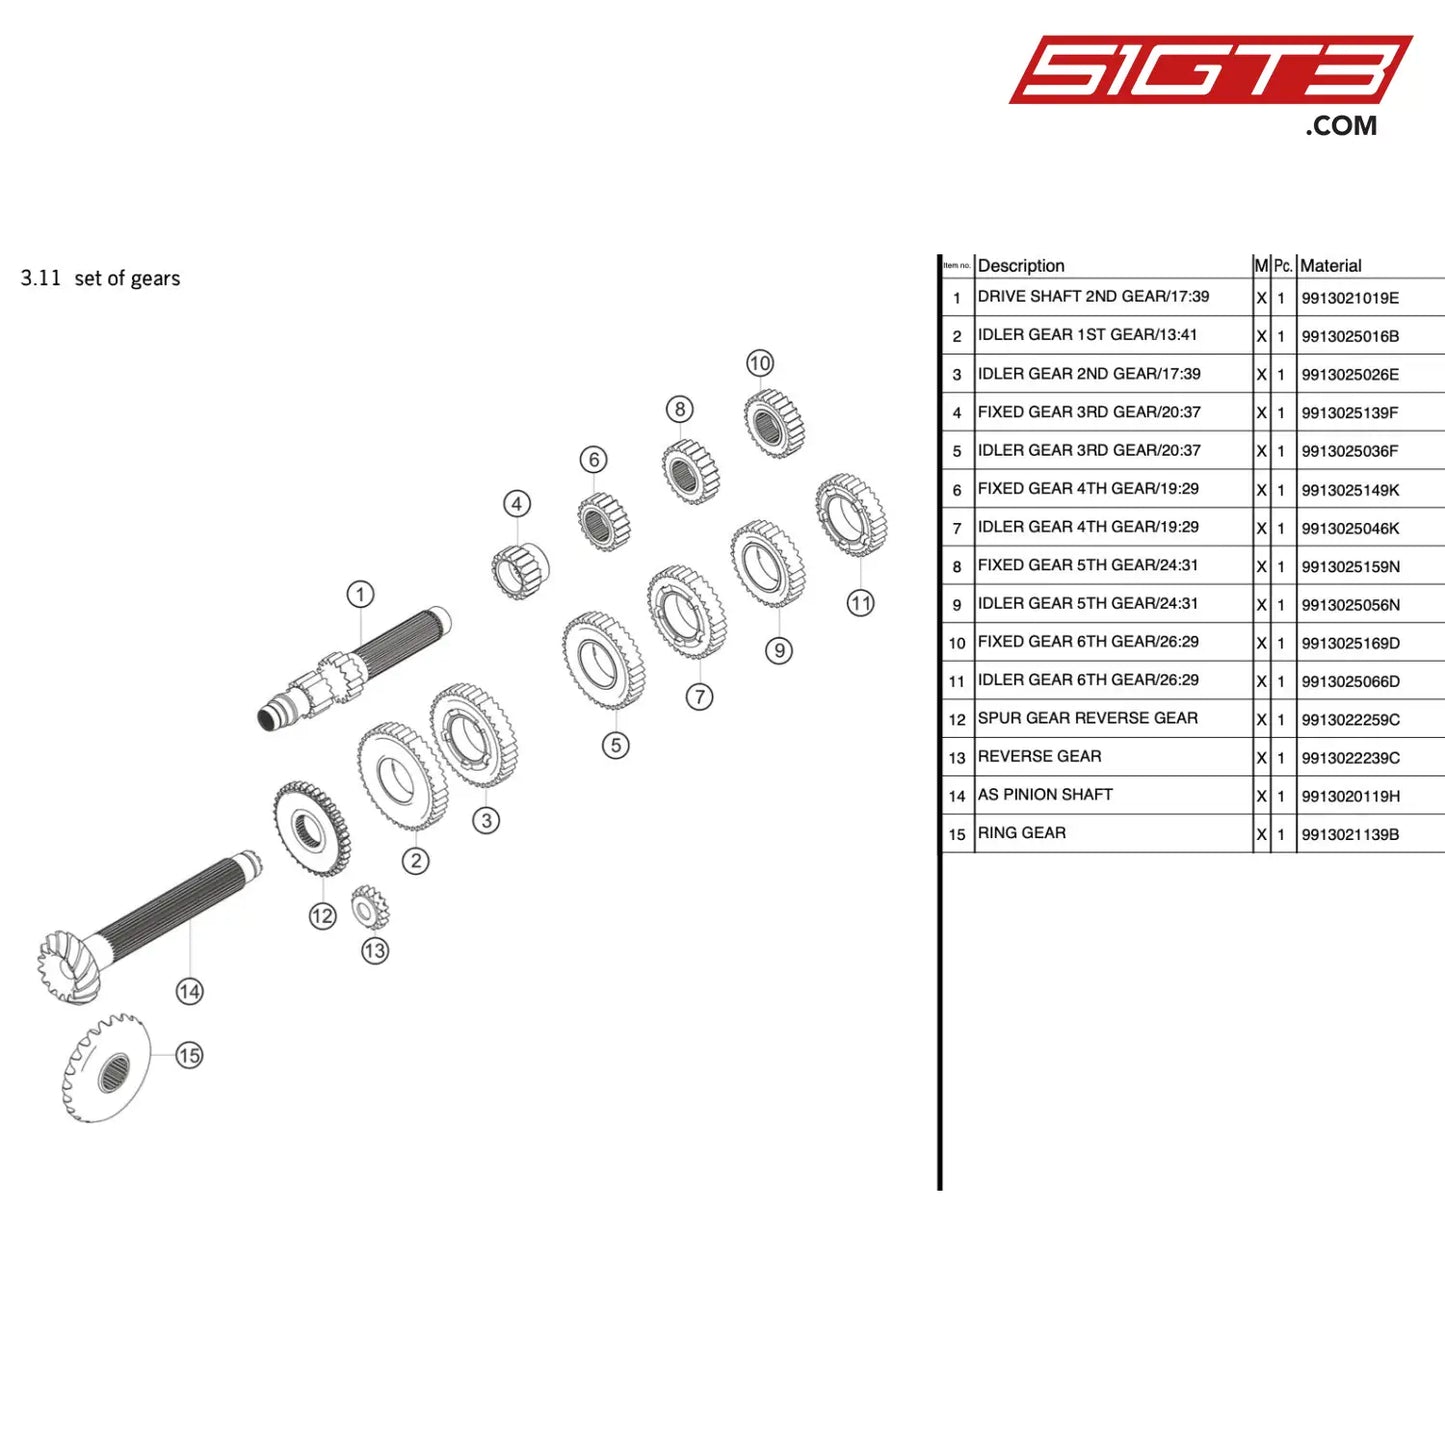 Fixed Gear 6Th Gear/26:29 - 9913025169D [Porsche 911 Gt3 R Type 991 (Gen 1)] Set Of Gears